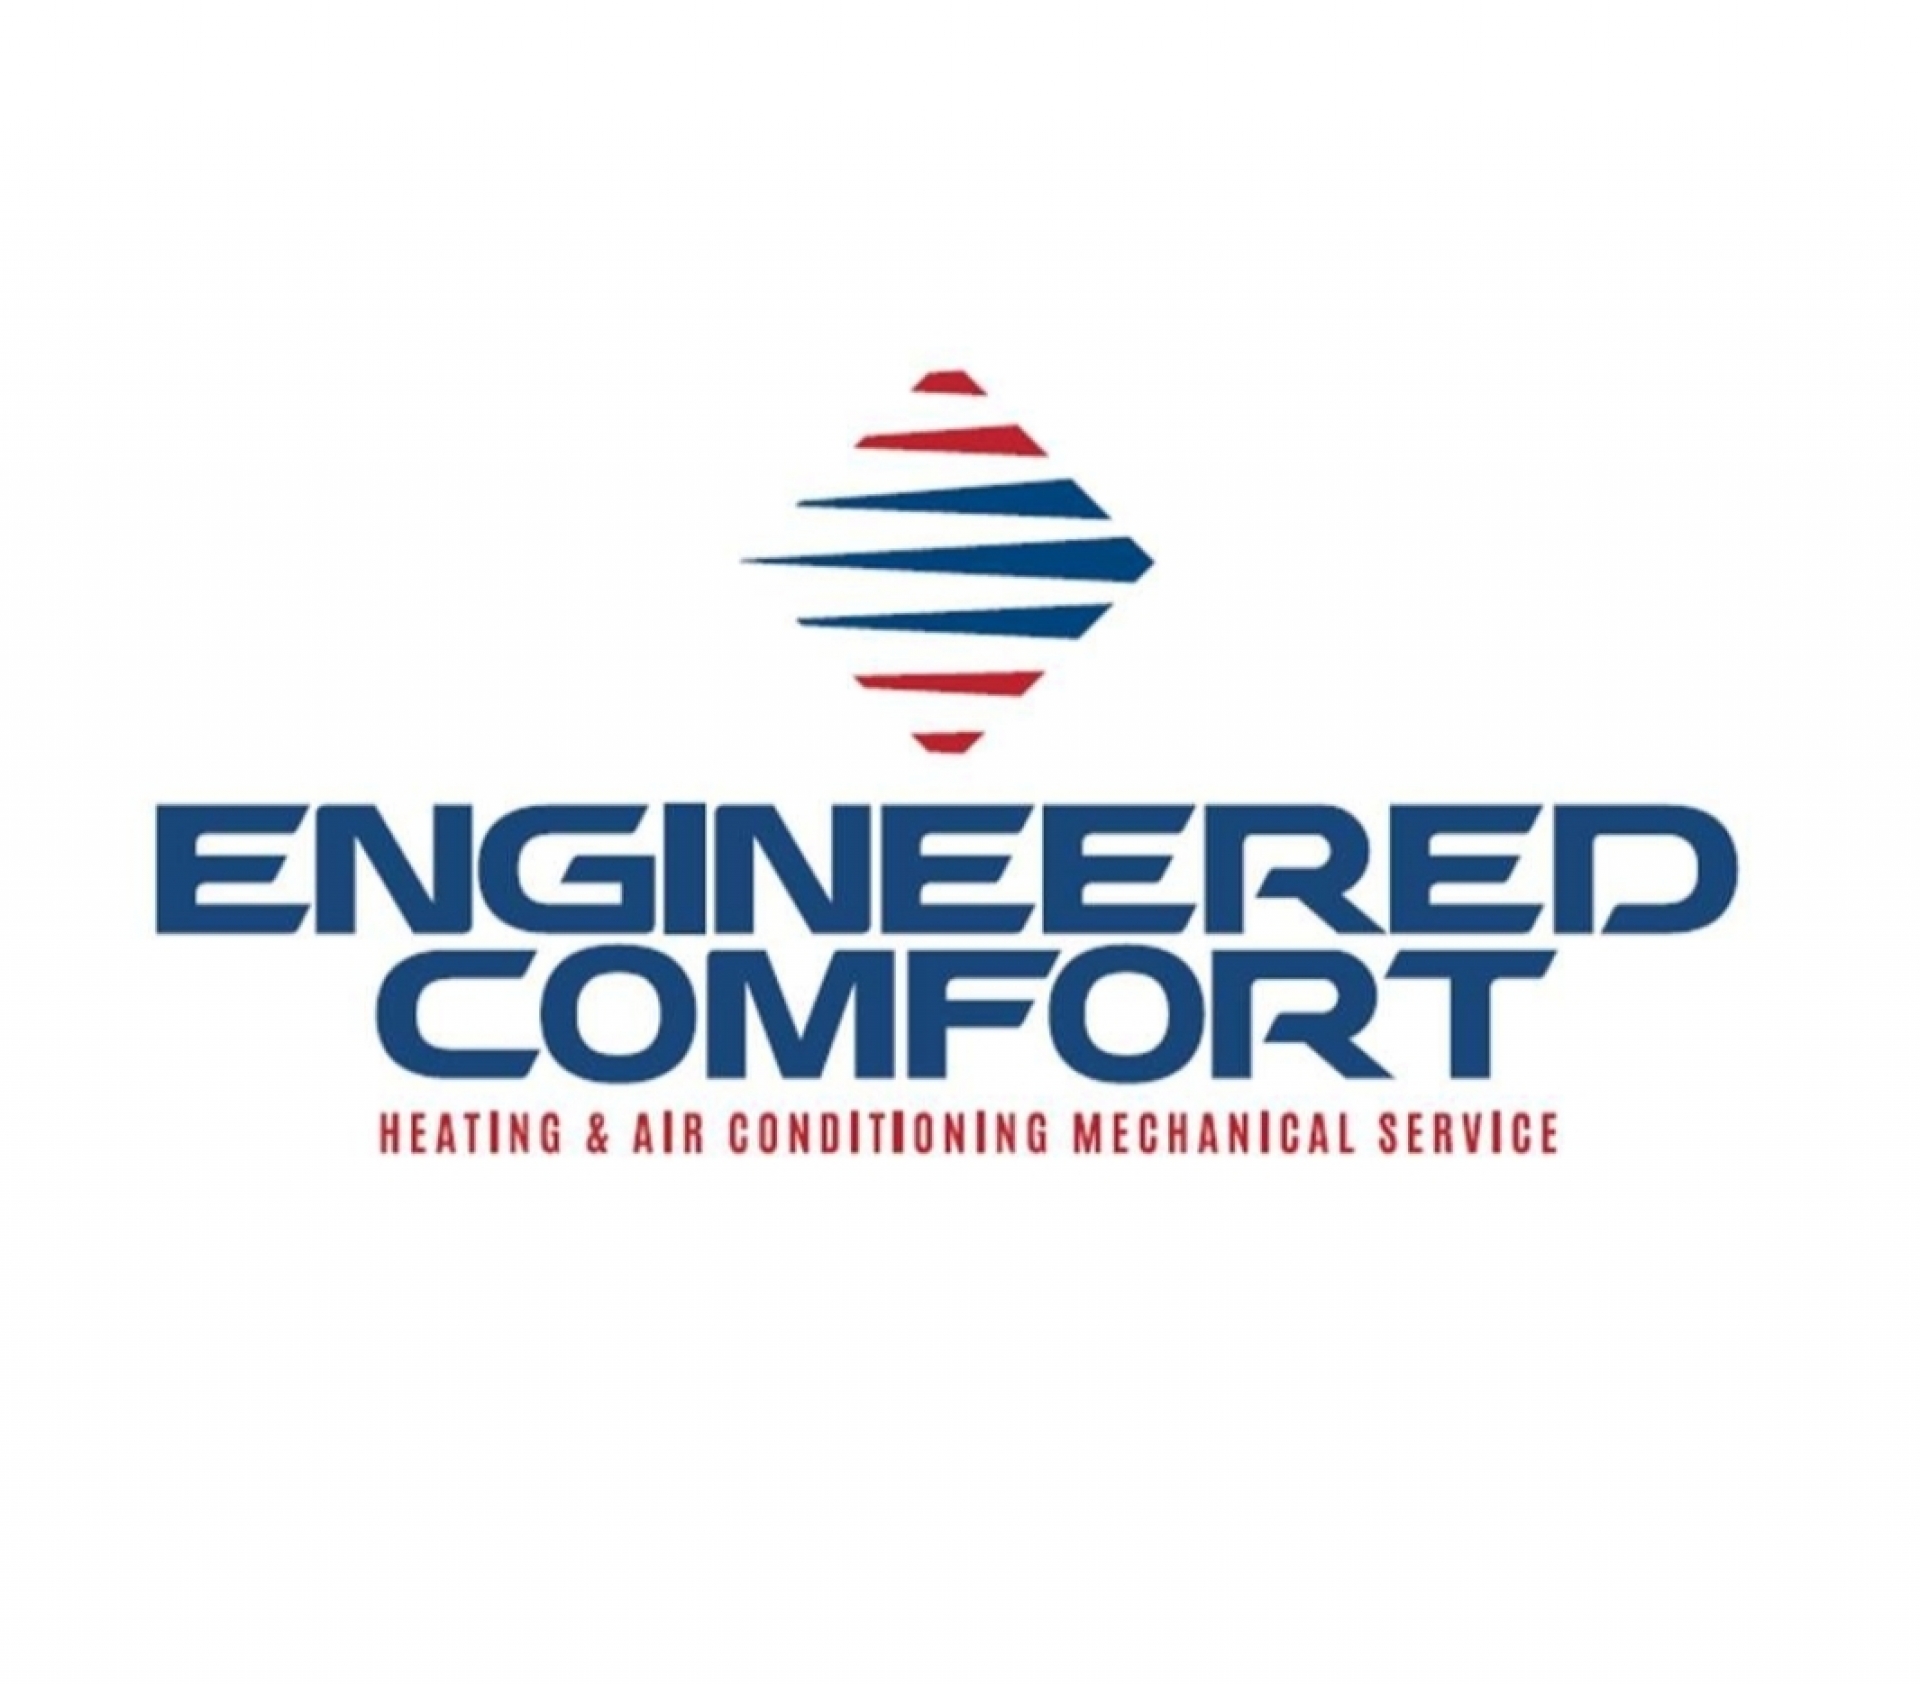 Engineered Comfort company logo